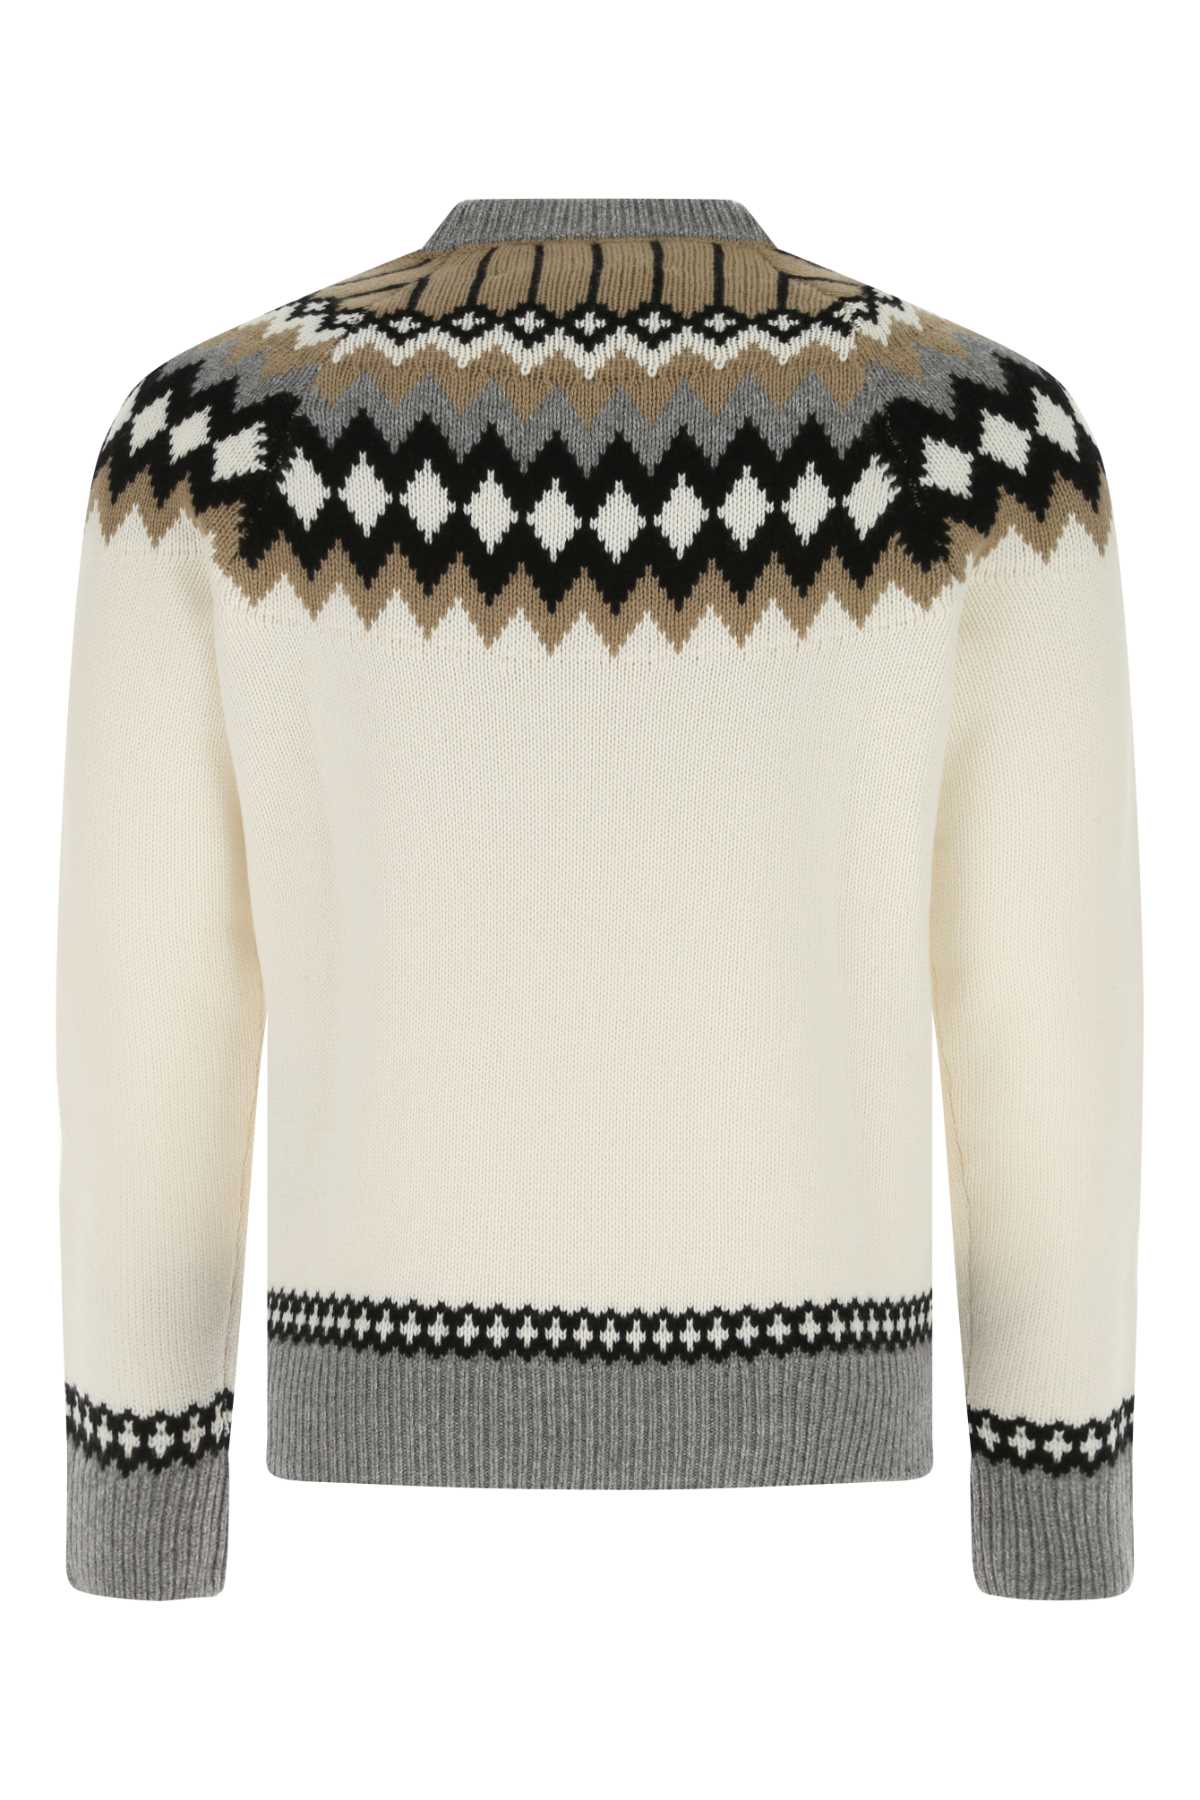 Prada Embroidered Cashmere Sweater In F0040